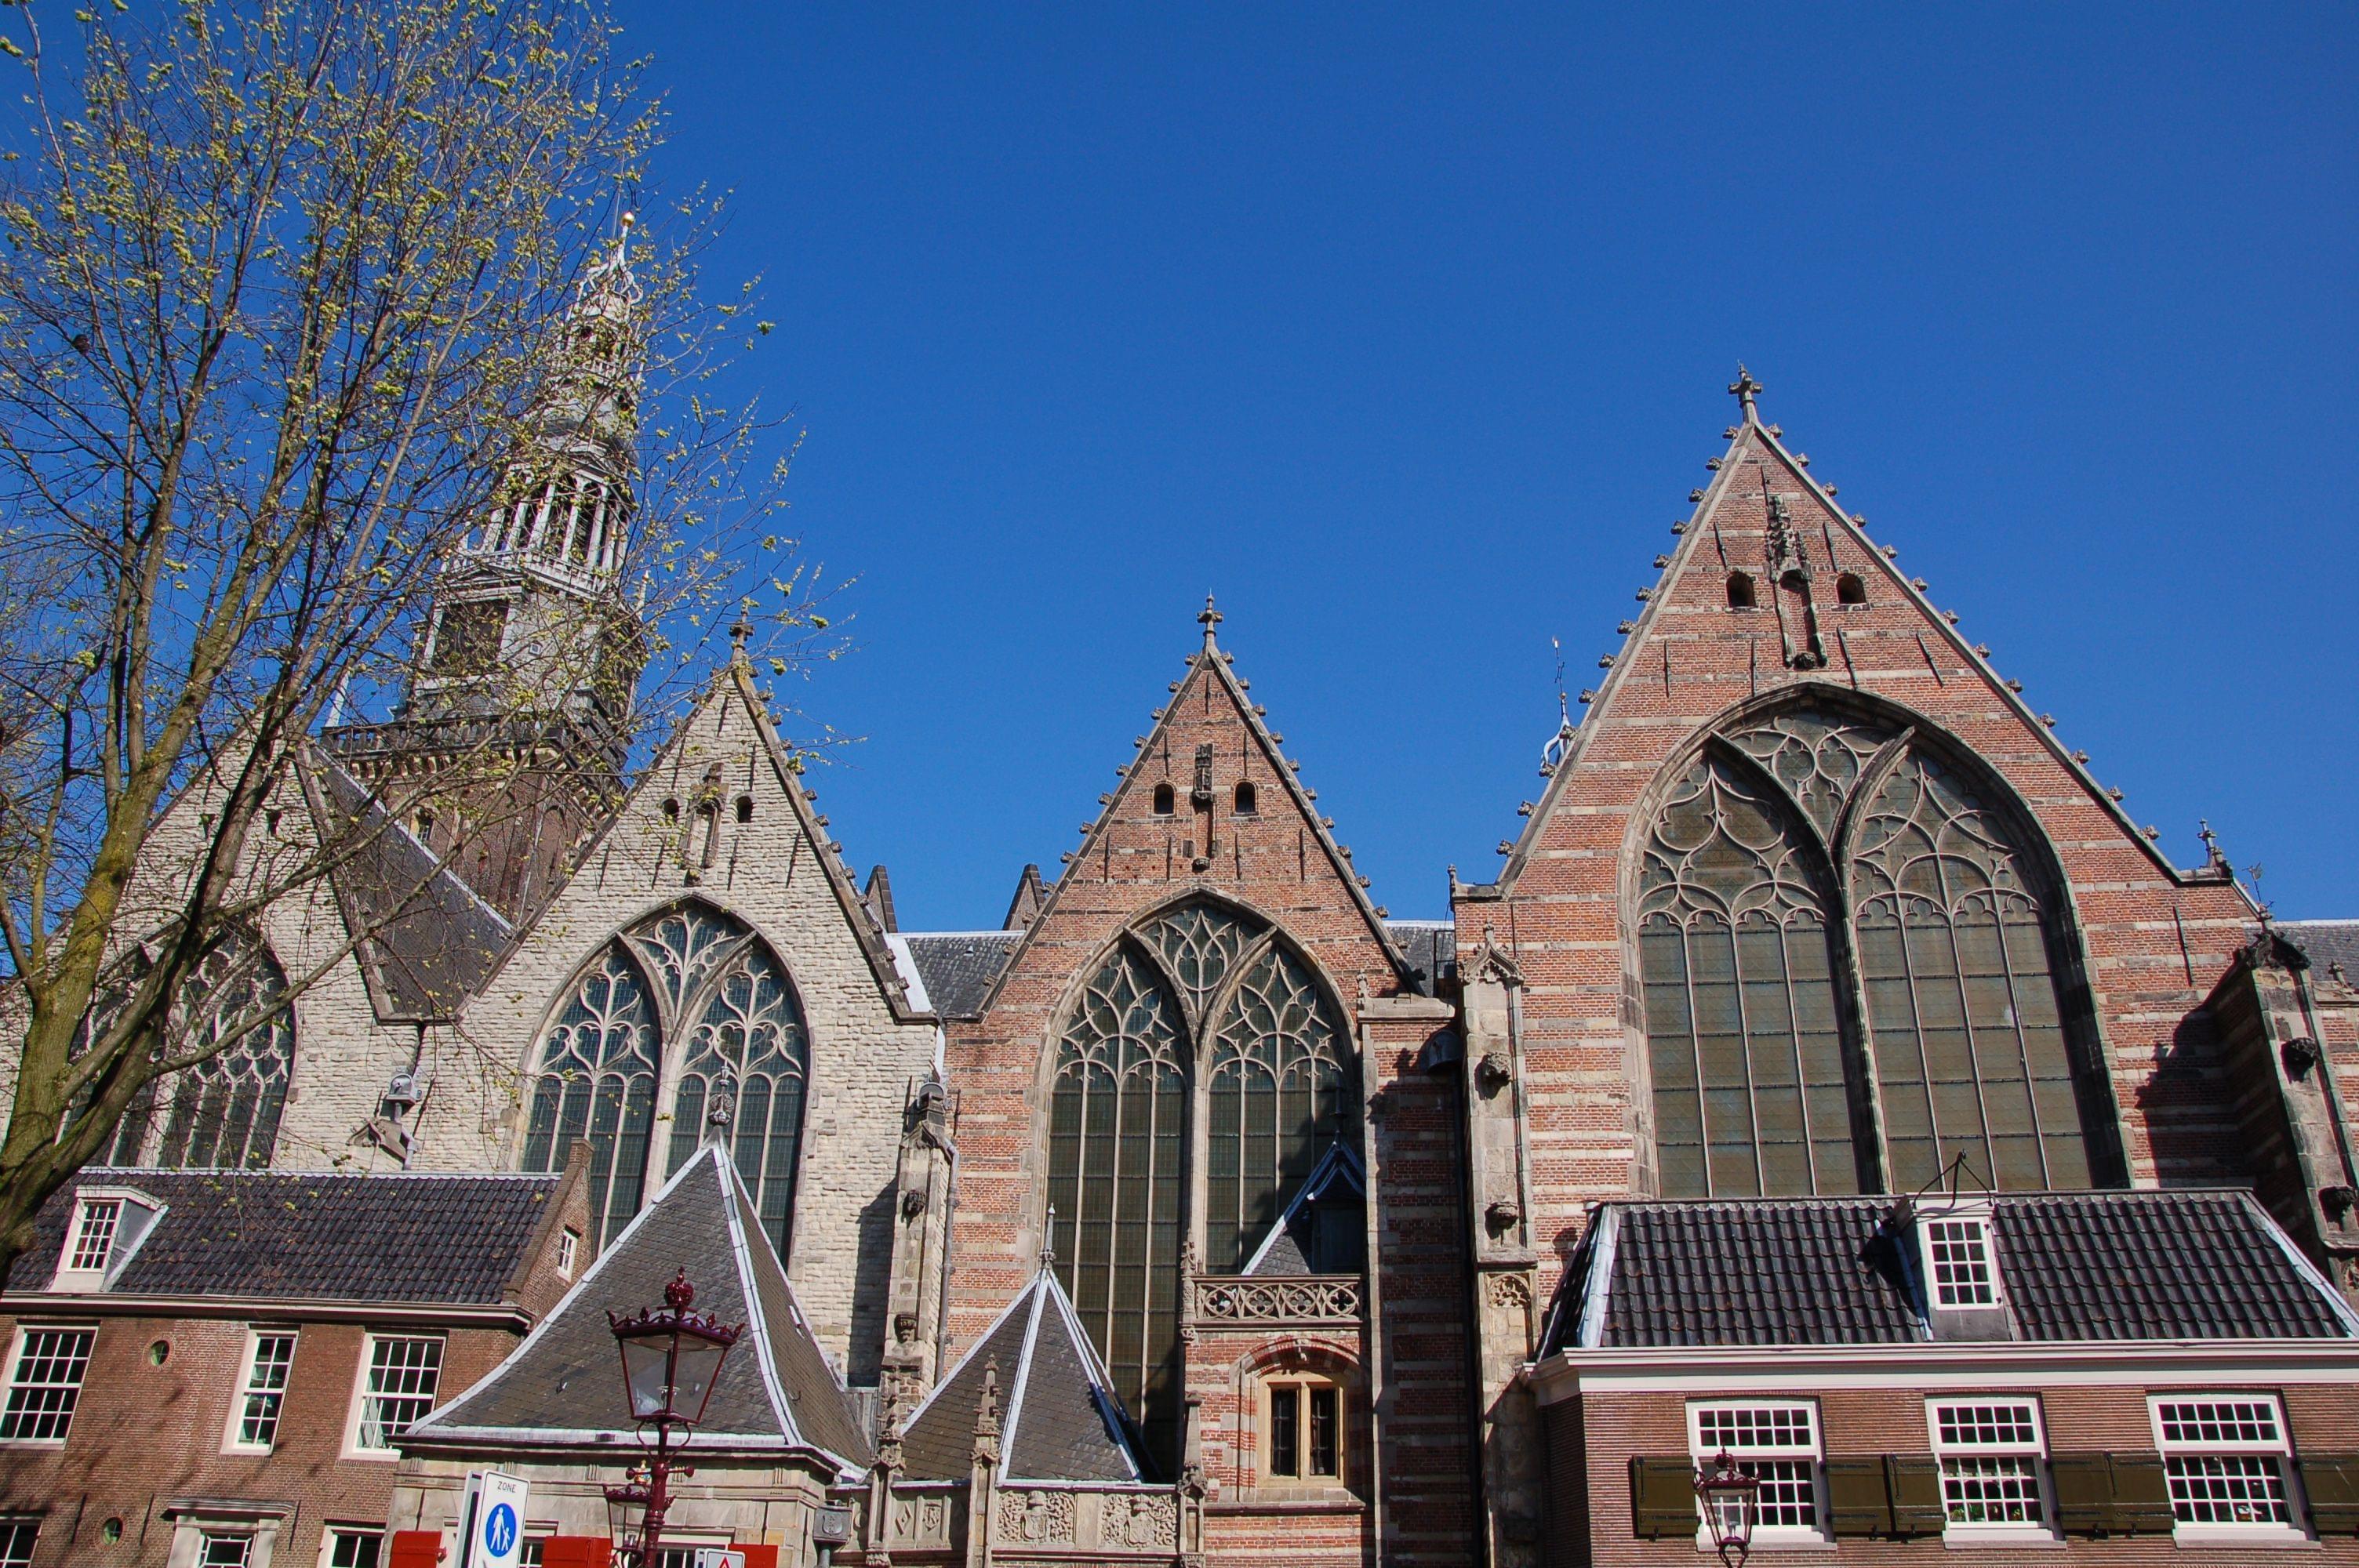 The Oude Church, Amsterdam